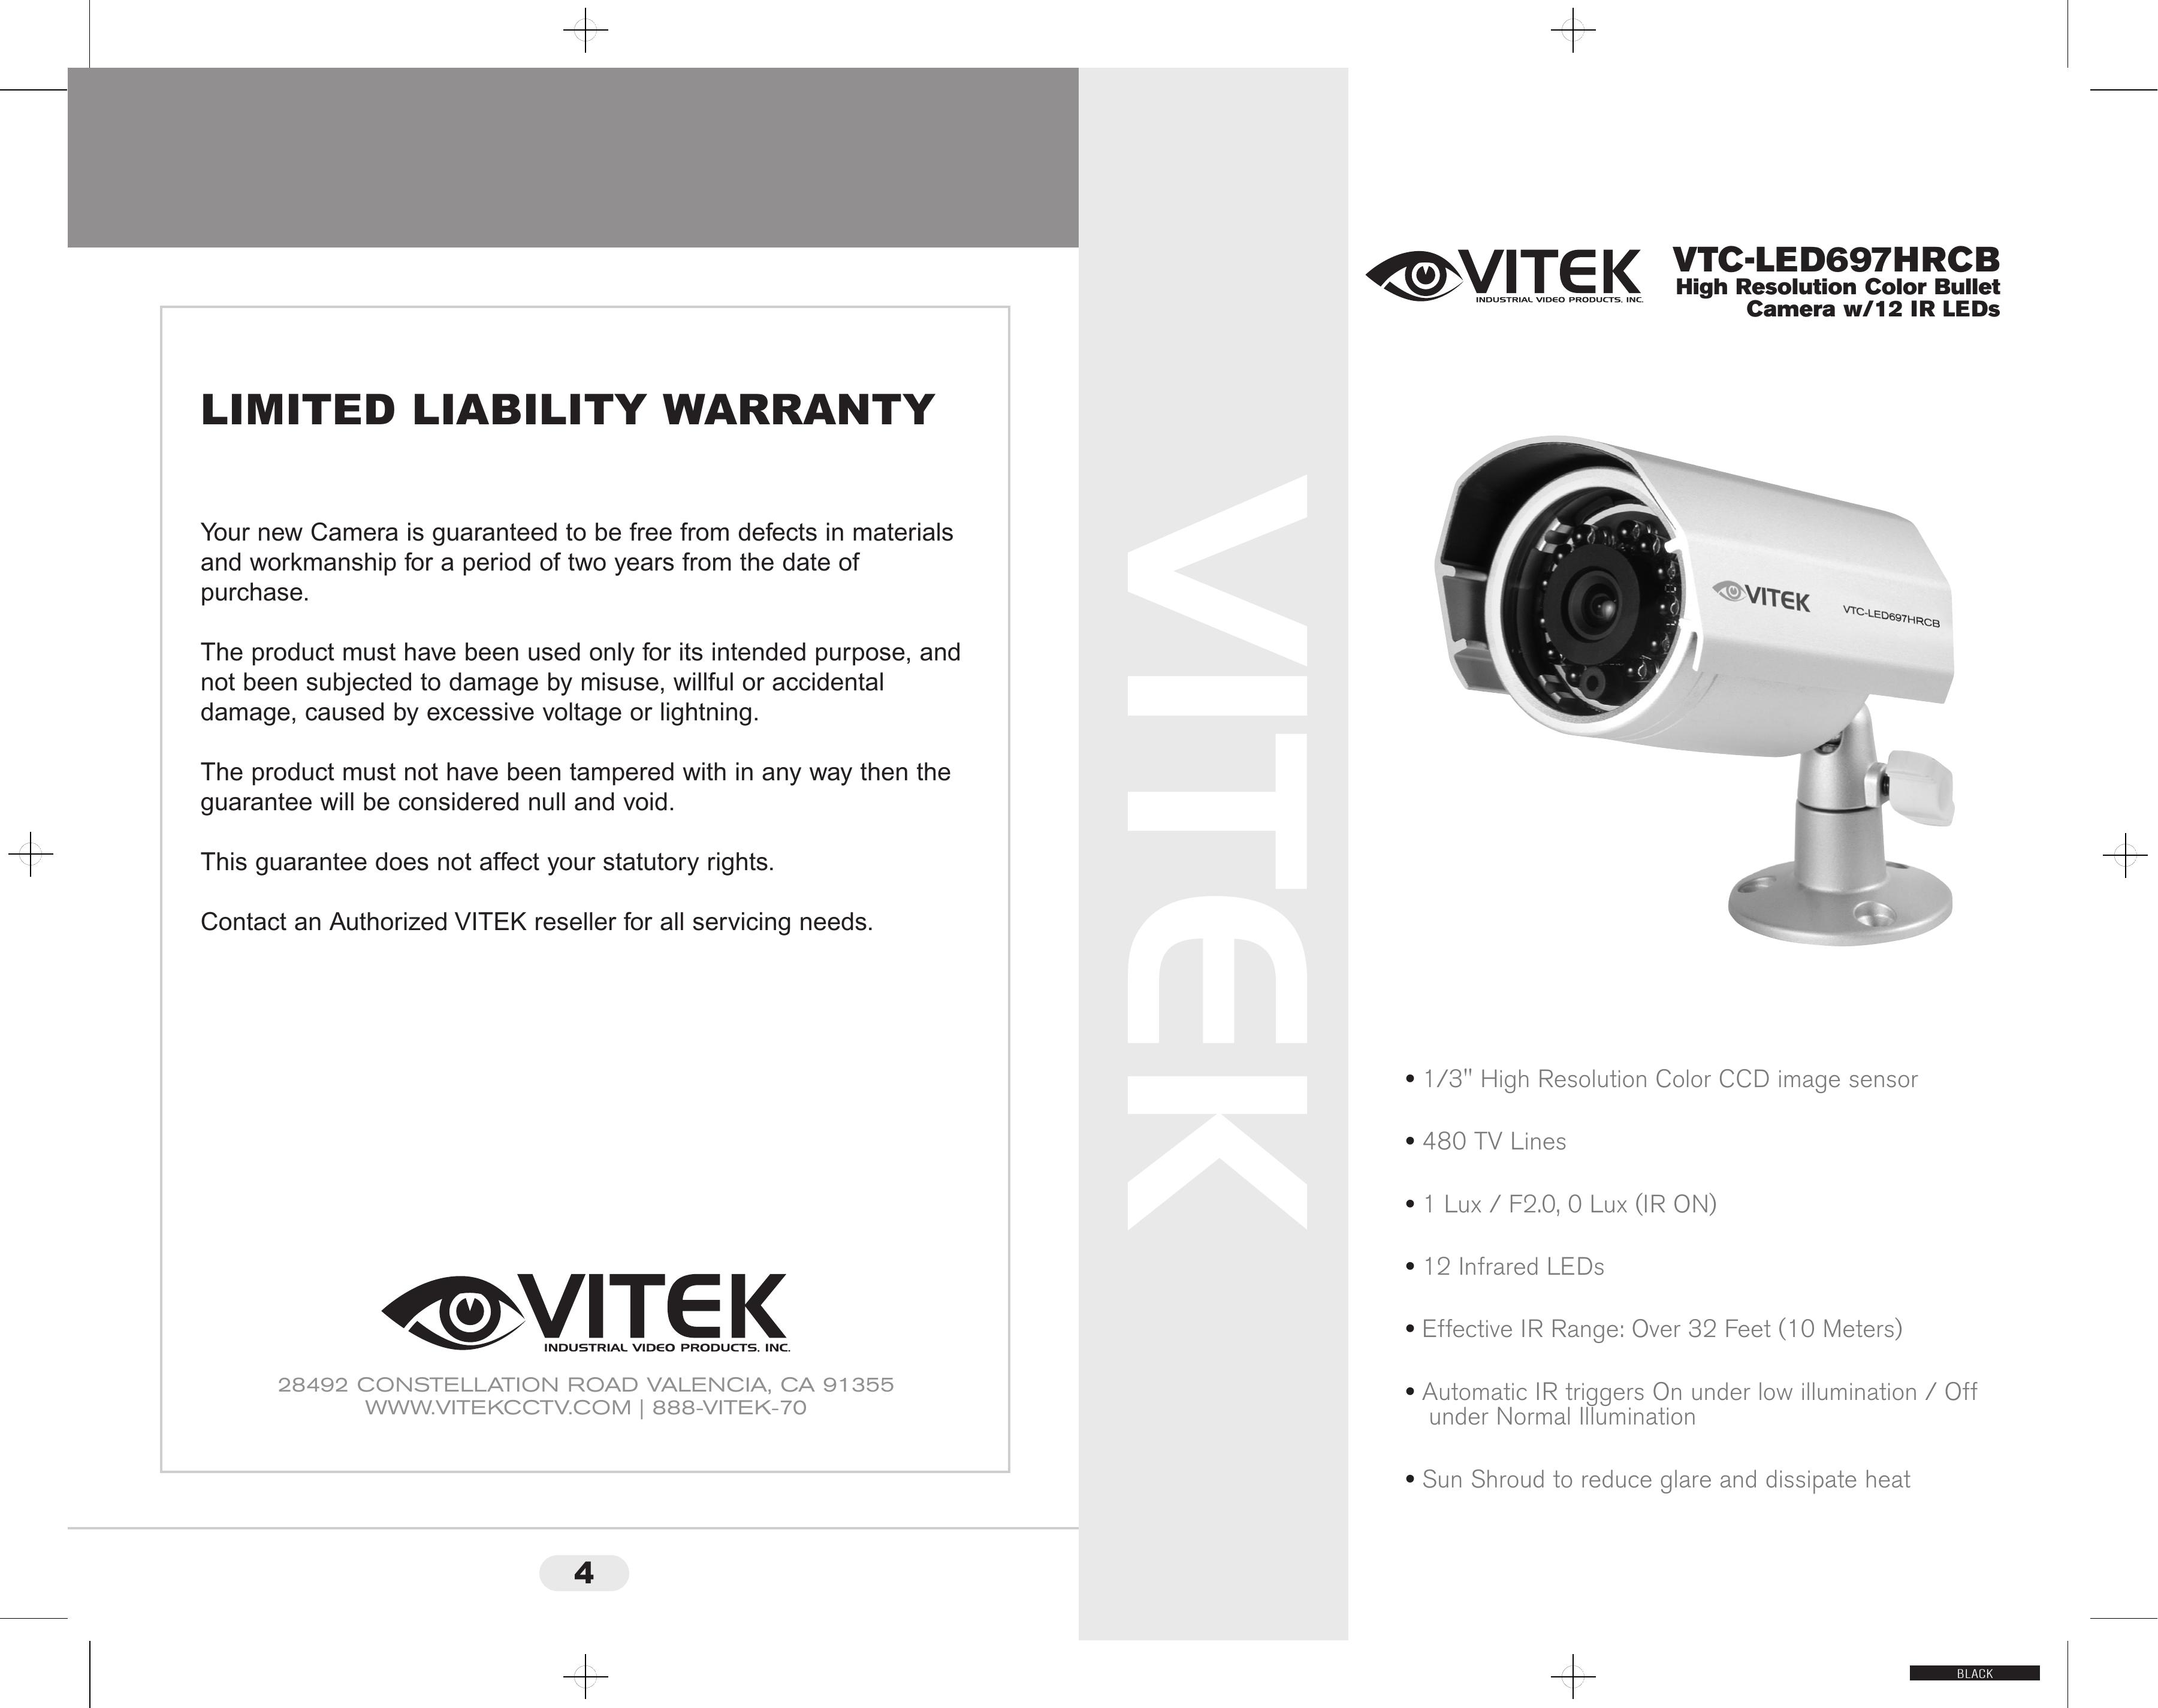 Vivitek VTC-LED697HRCB Security Camera User Manual